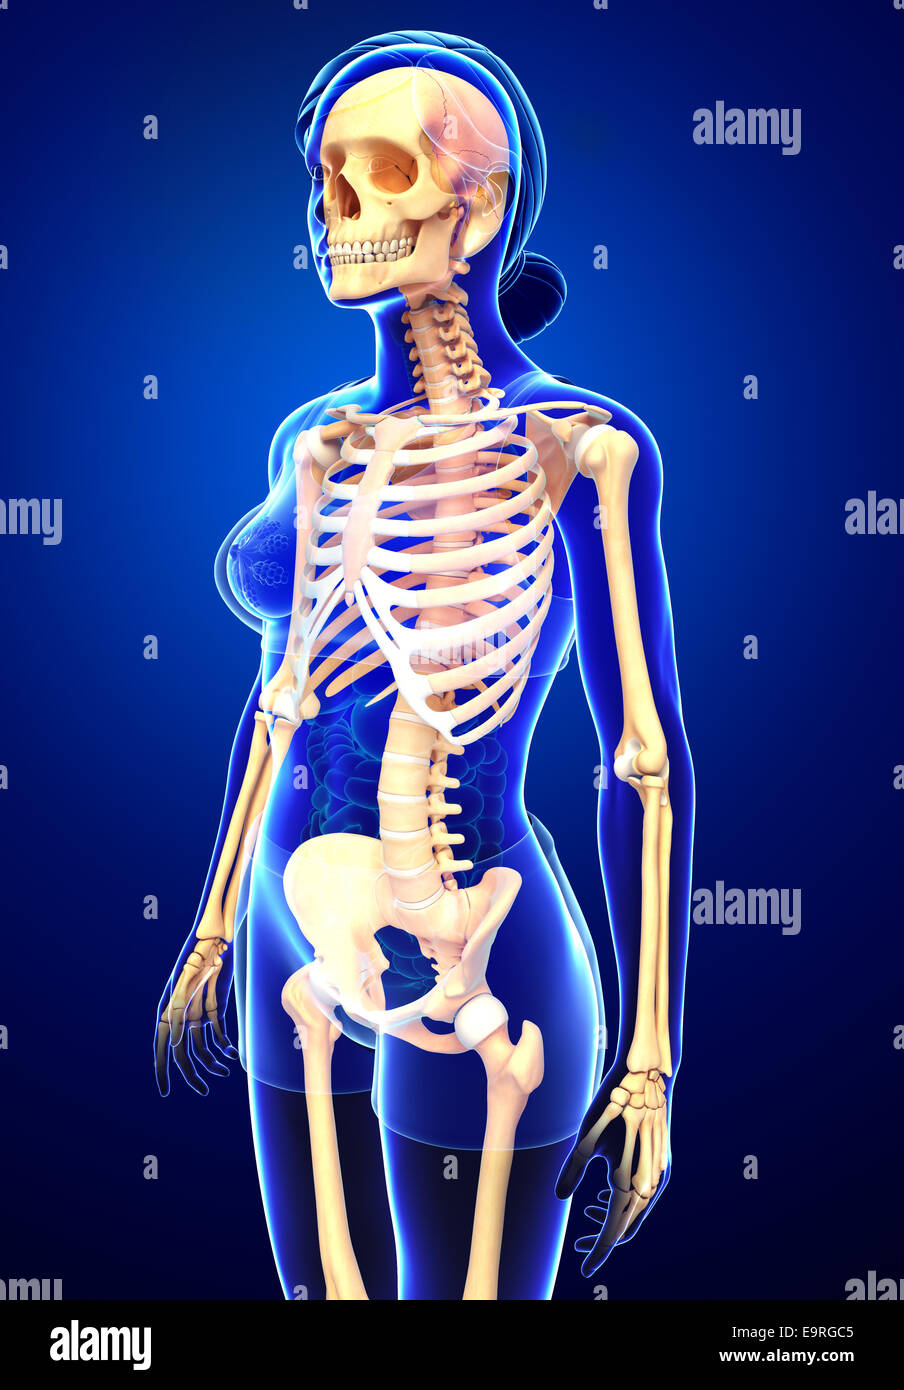 Illustration of human skeleton side view Stock Photo - Alamy